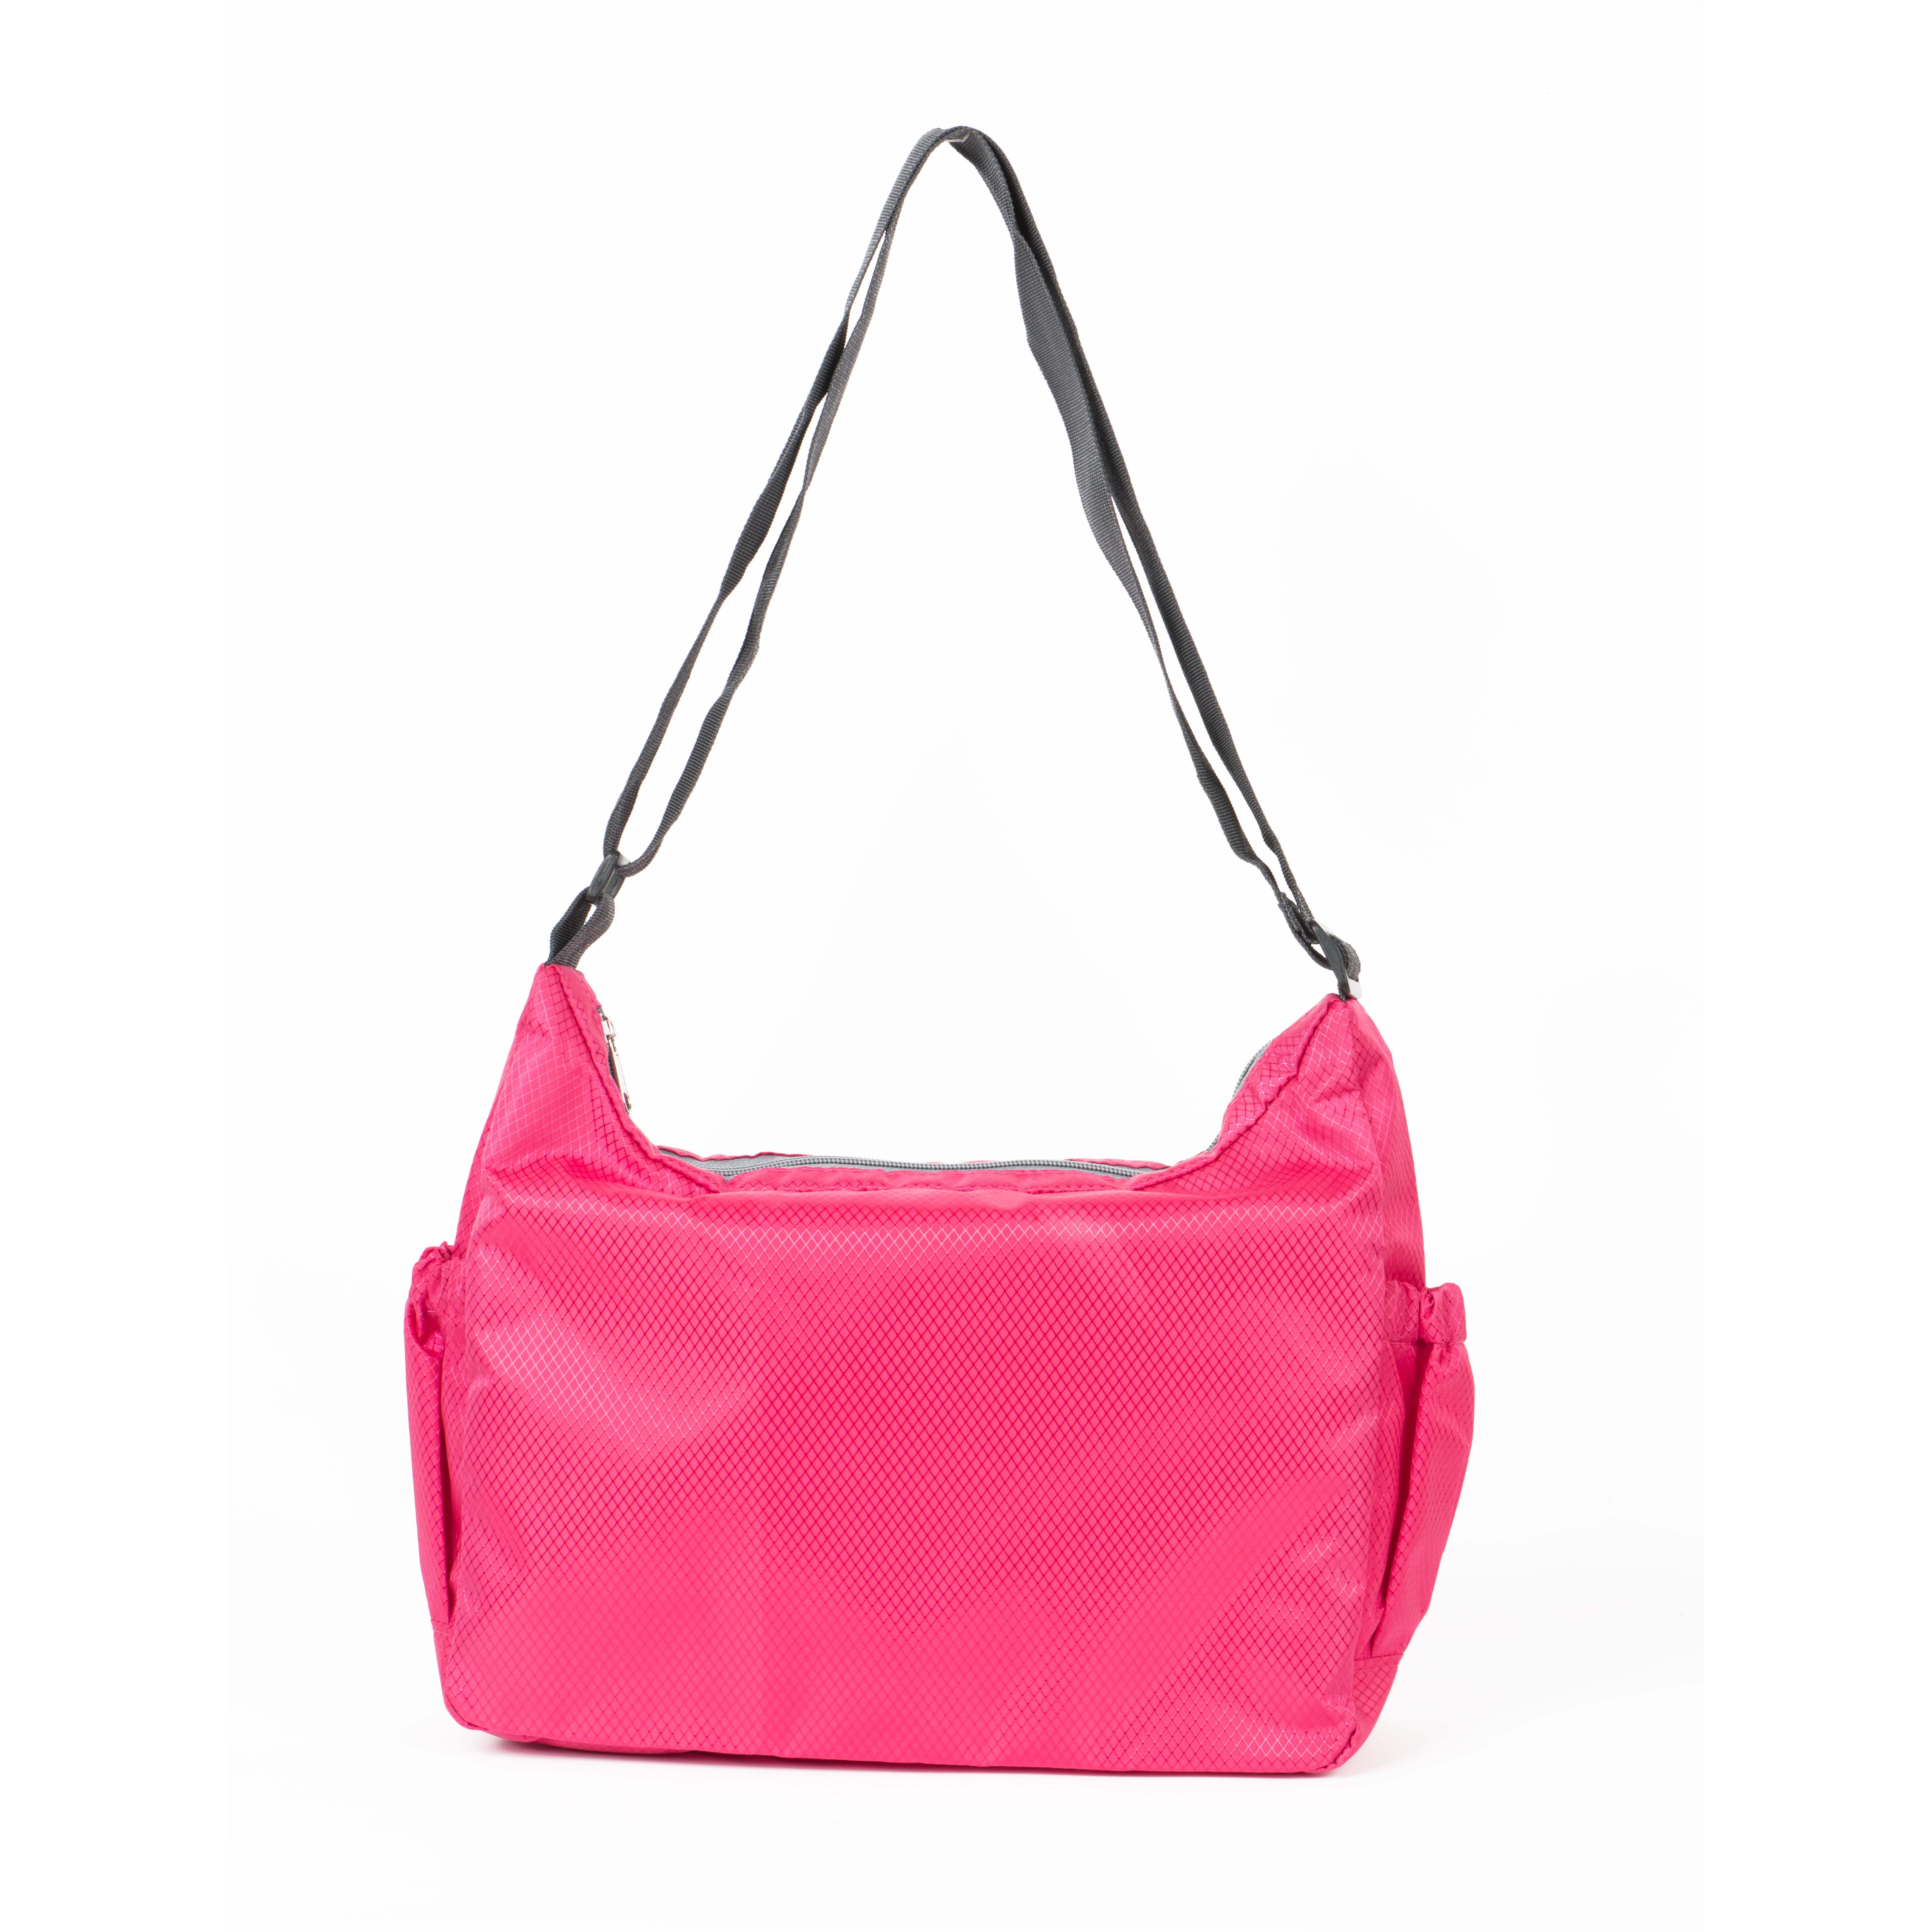 Foldable Sling Bag - Gift Idea